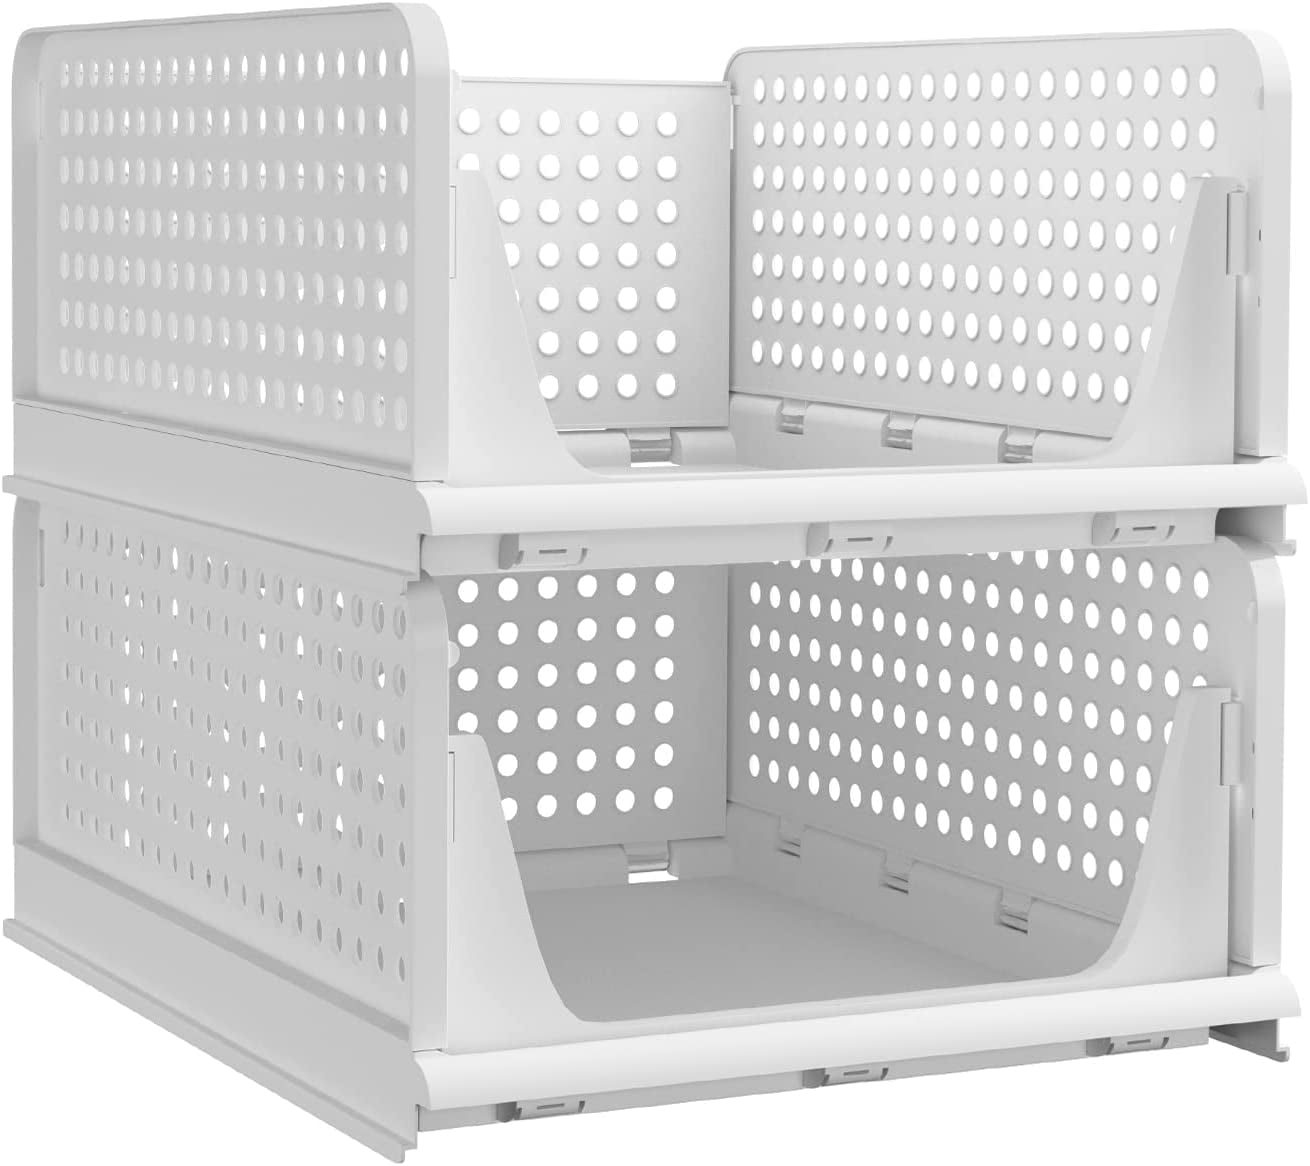 FRANIKAI Closet Organizers and Storage Bins, 4 Set Foldable Drawer Div